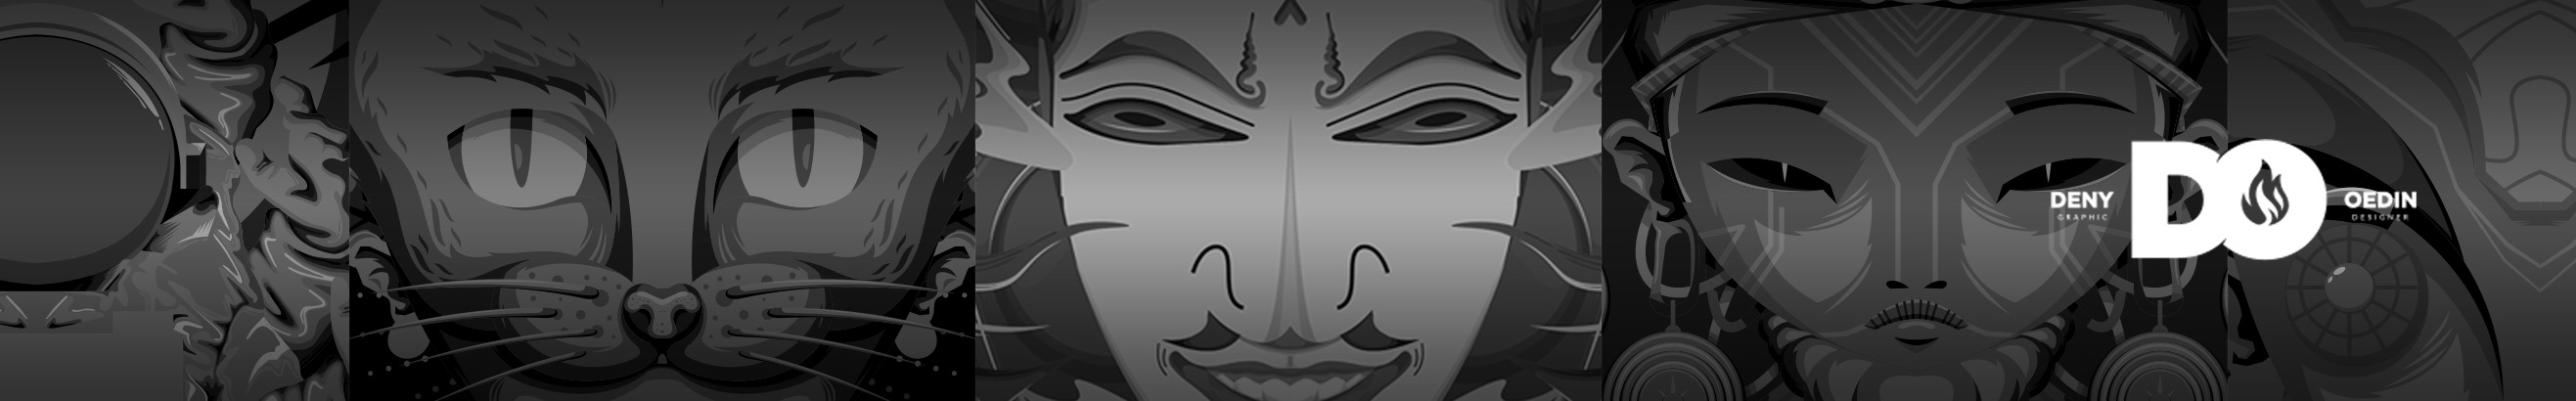 Deny Oedin's profile banner